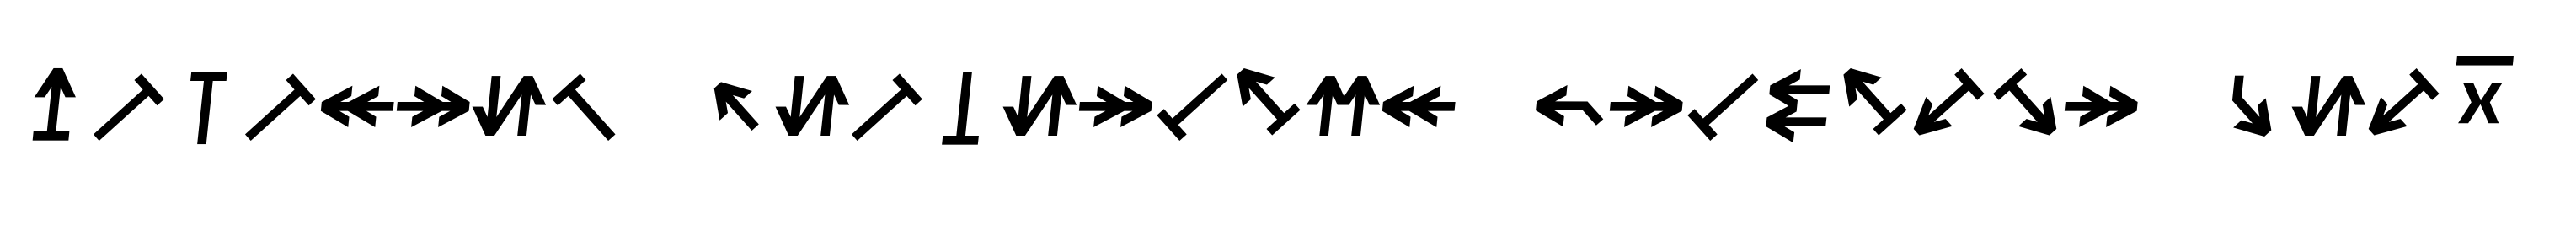 Monostep Geometrics Straight Regular Italic